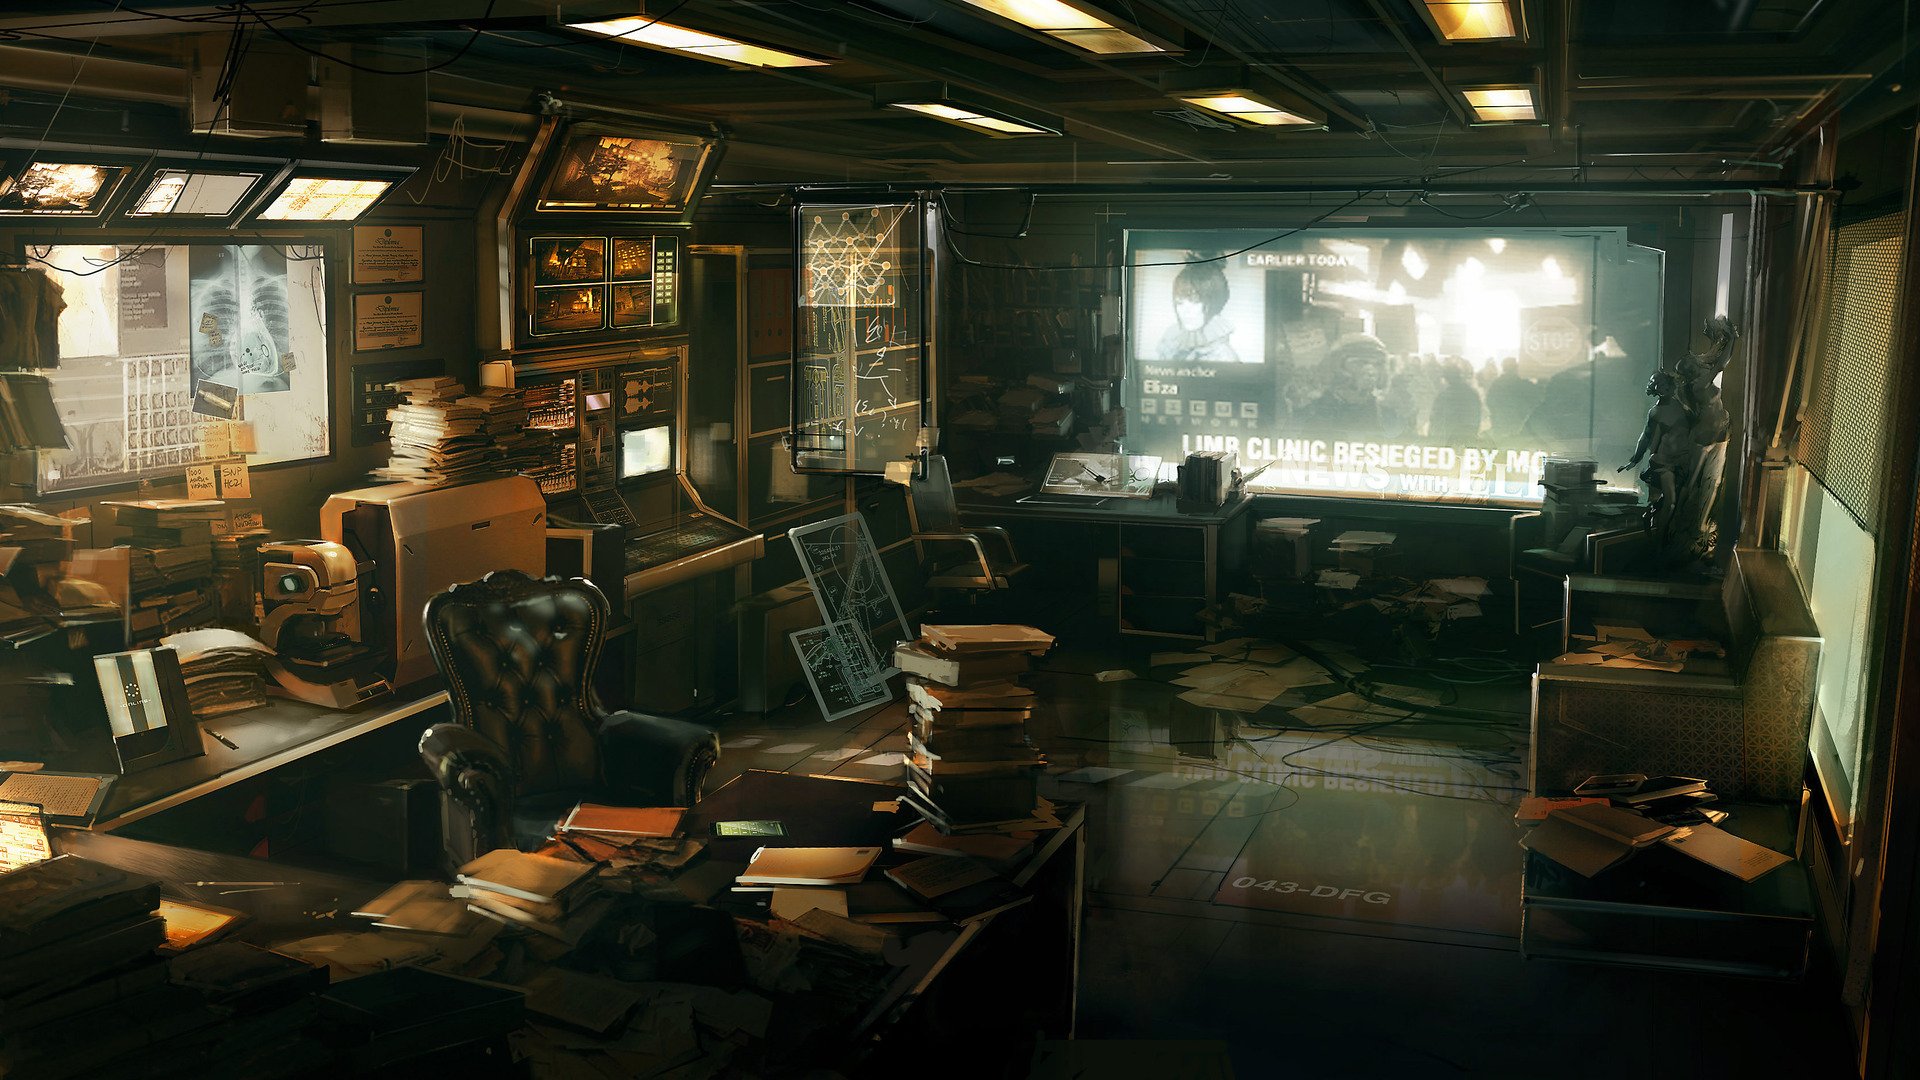 Video Game Deus Ex: Human Revolution HD Wallpaper | Background Image